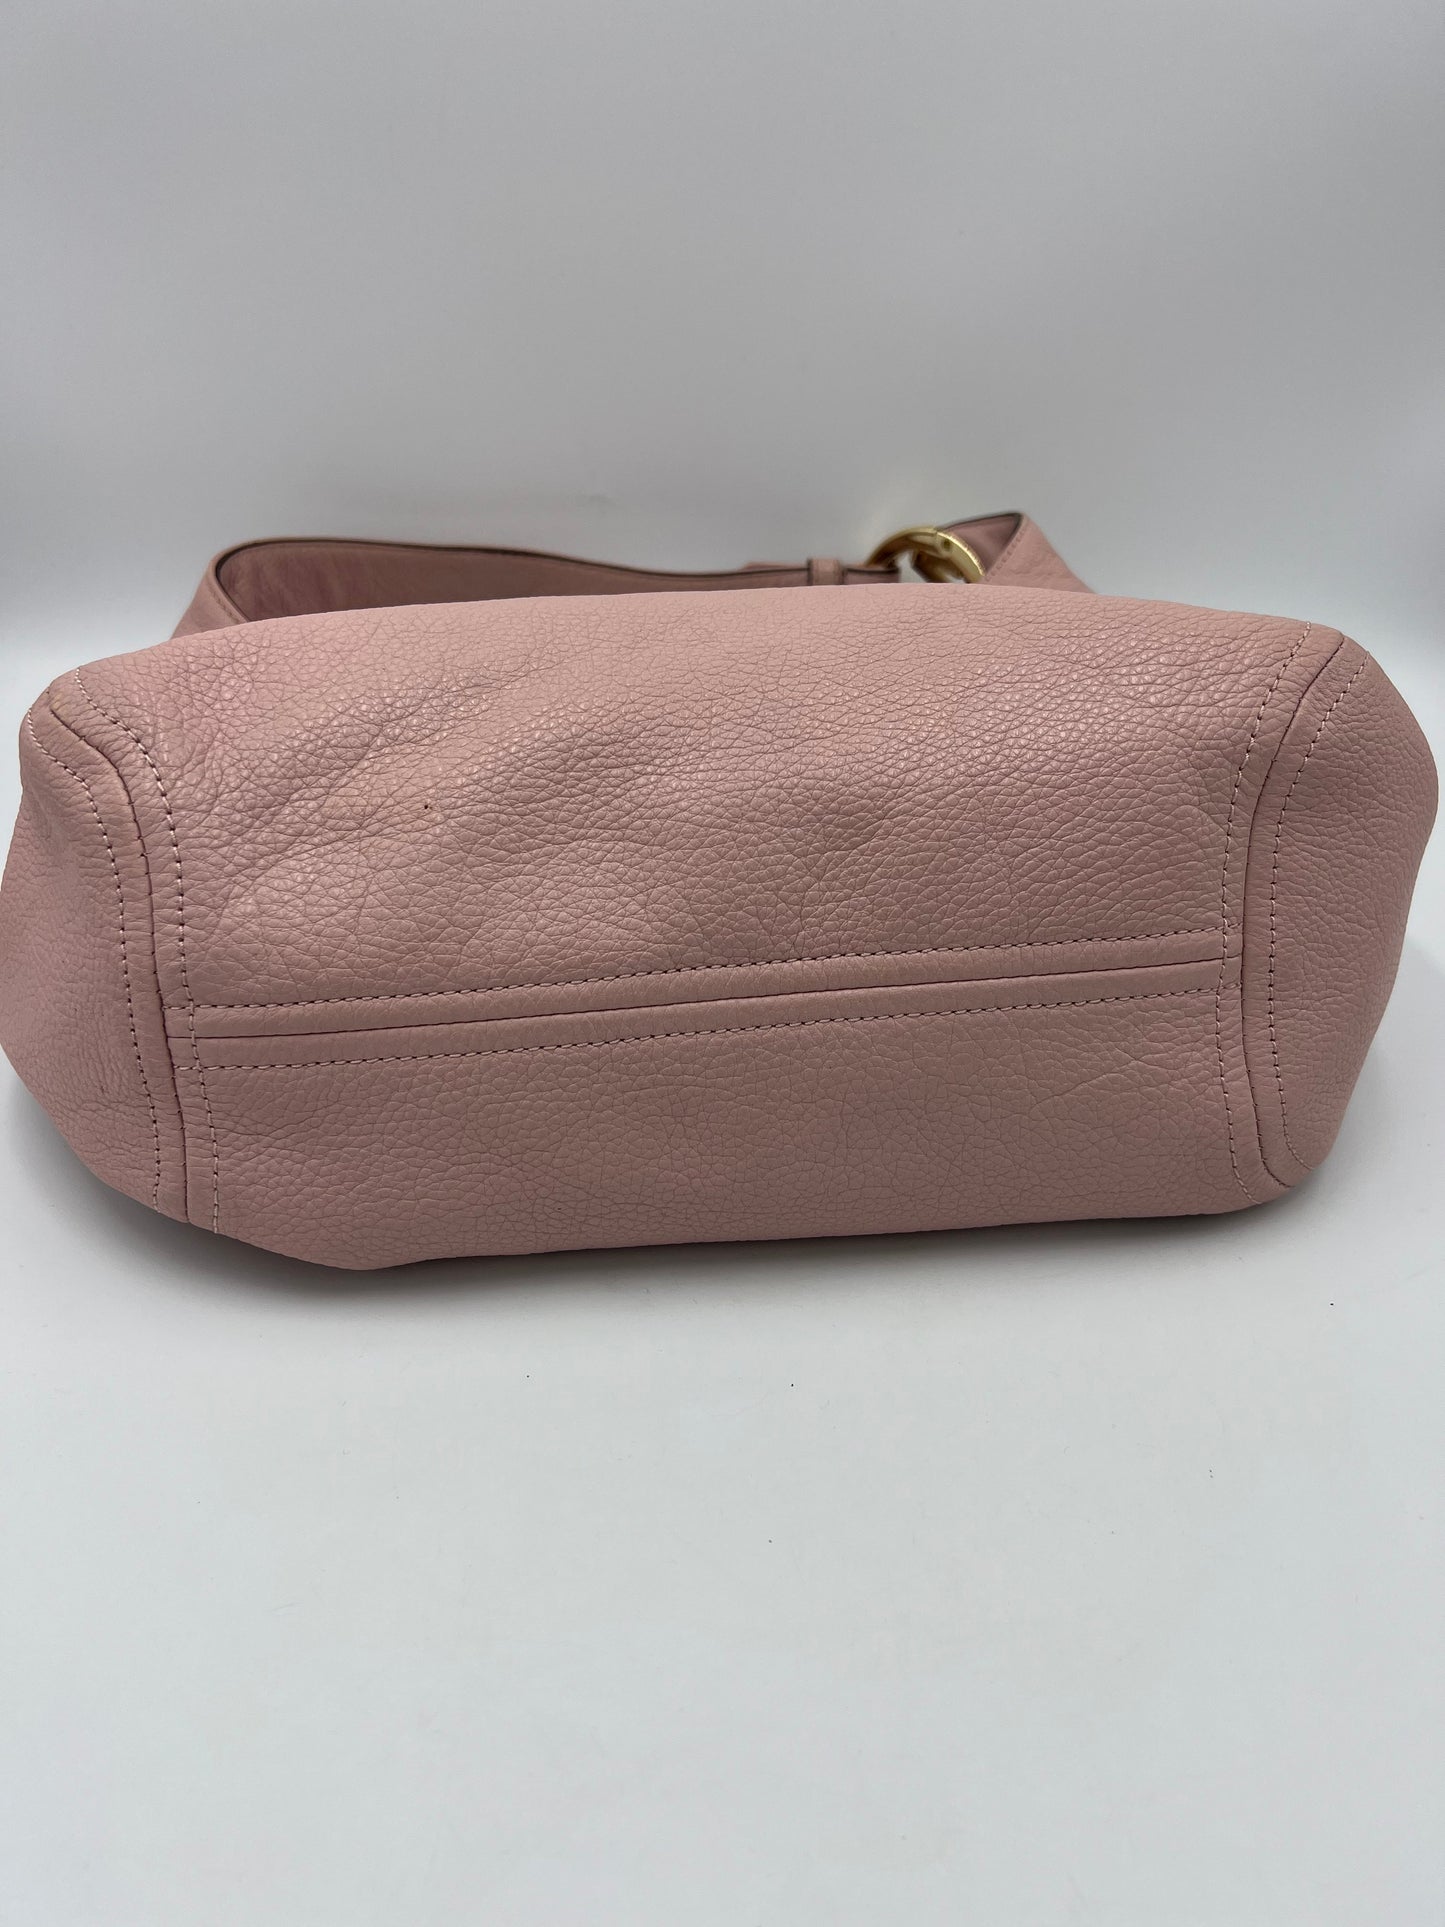 Handbag Designer By Michael Kors